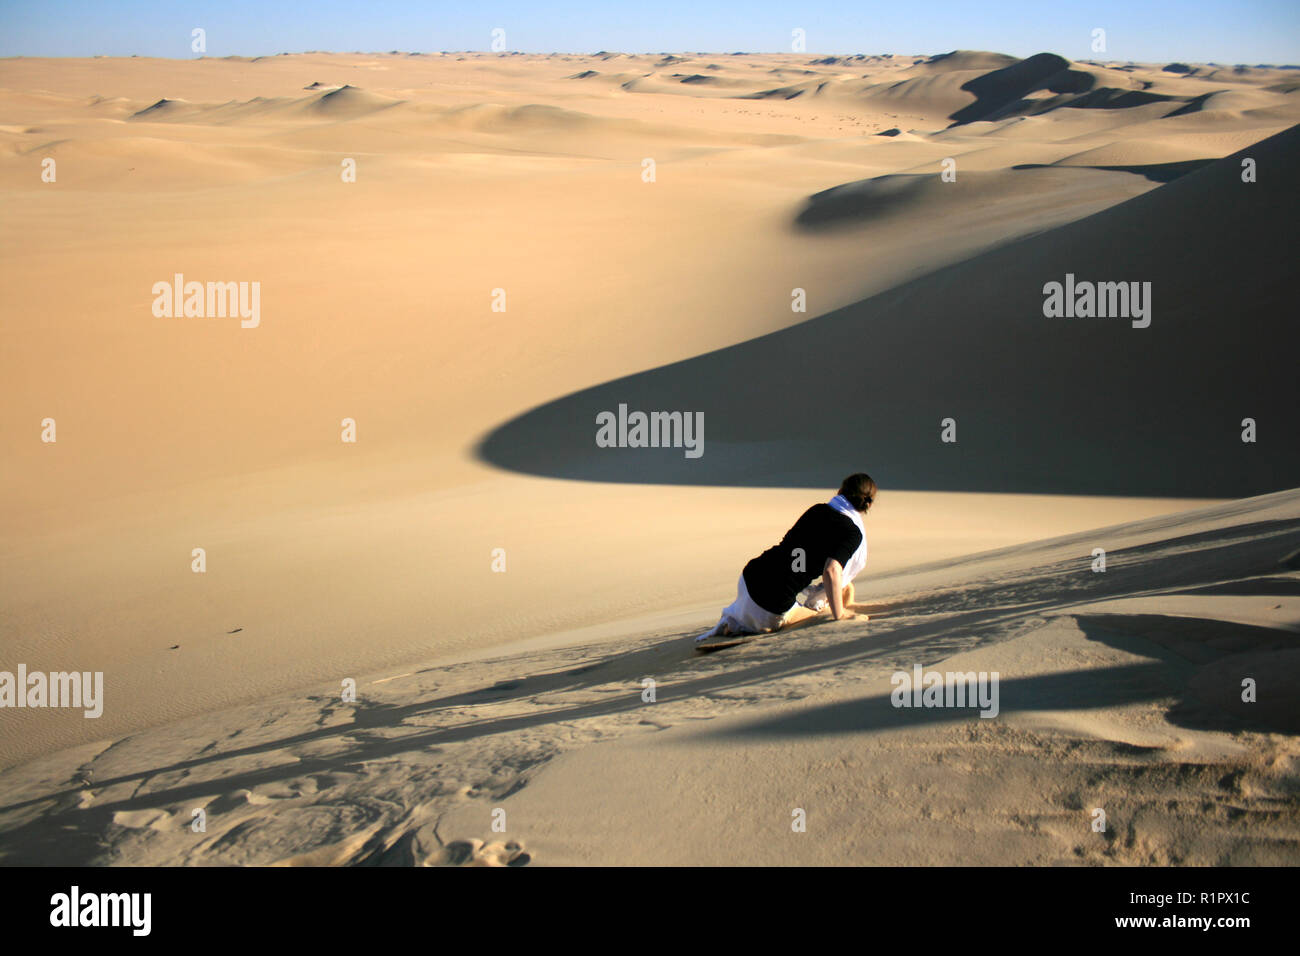 Sandboarding wipe-out in Sahara desert near Siwa, Egypt Stock Photo